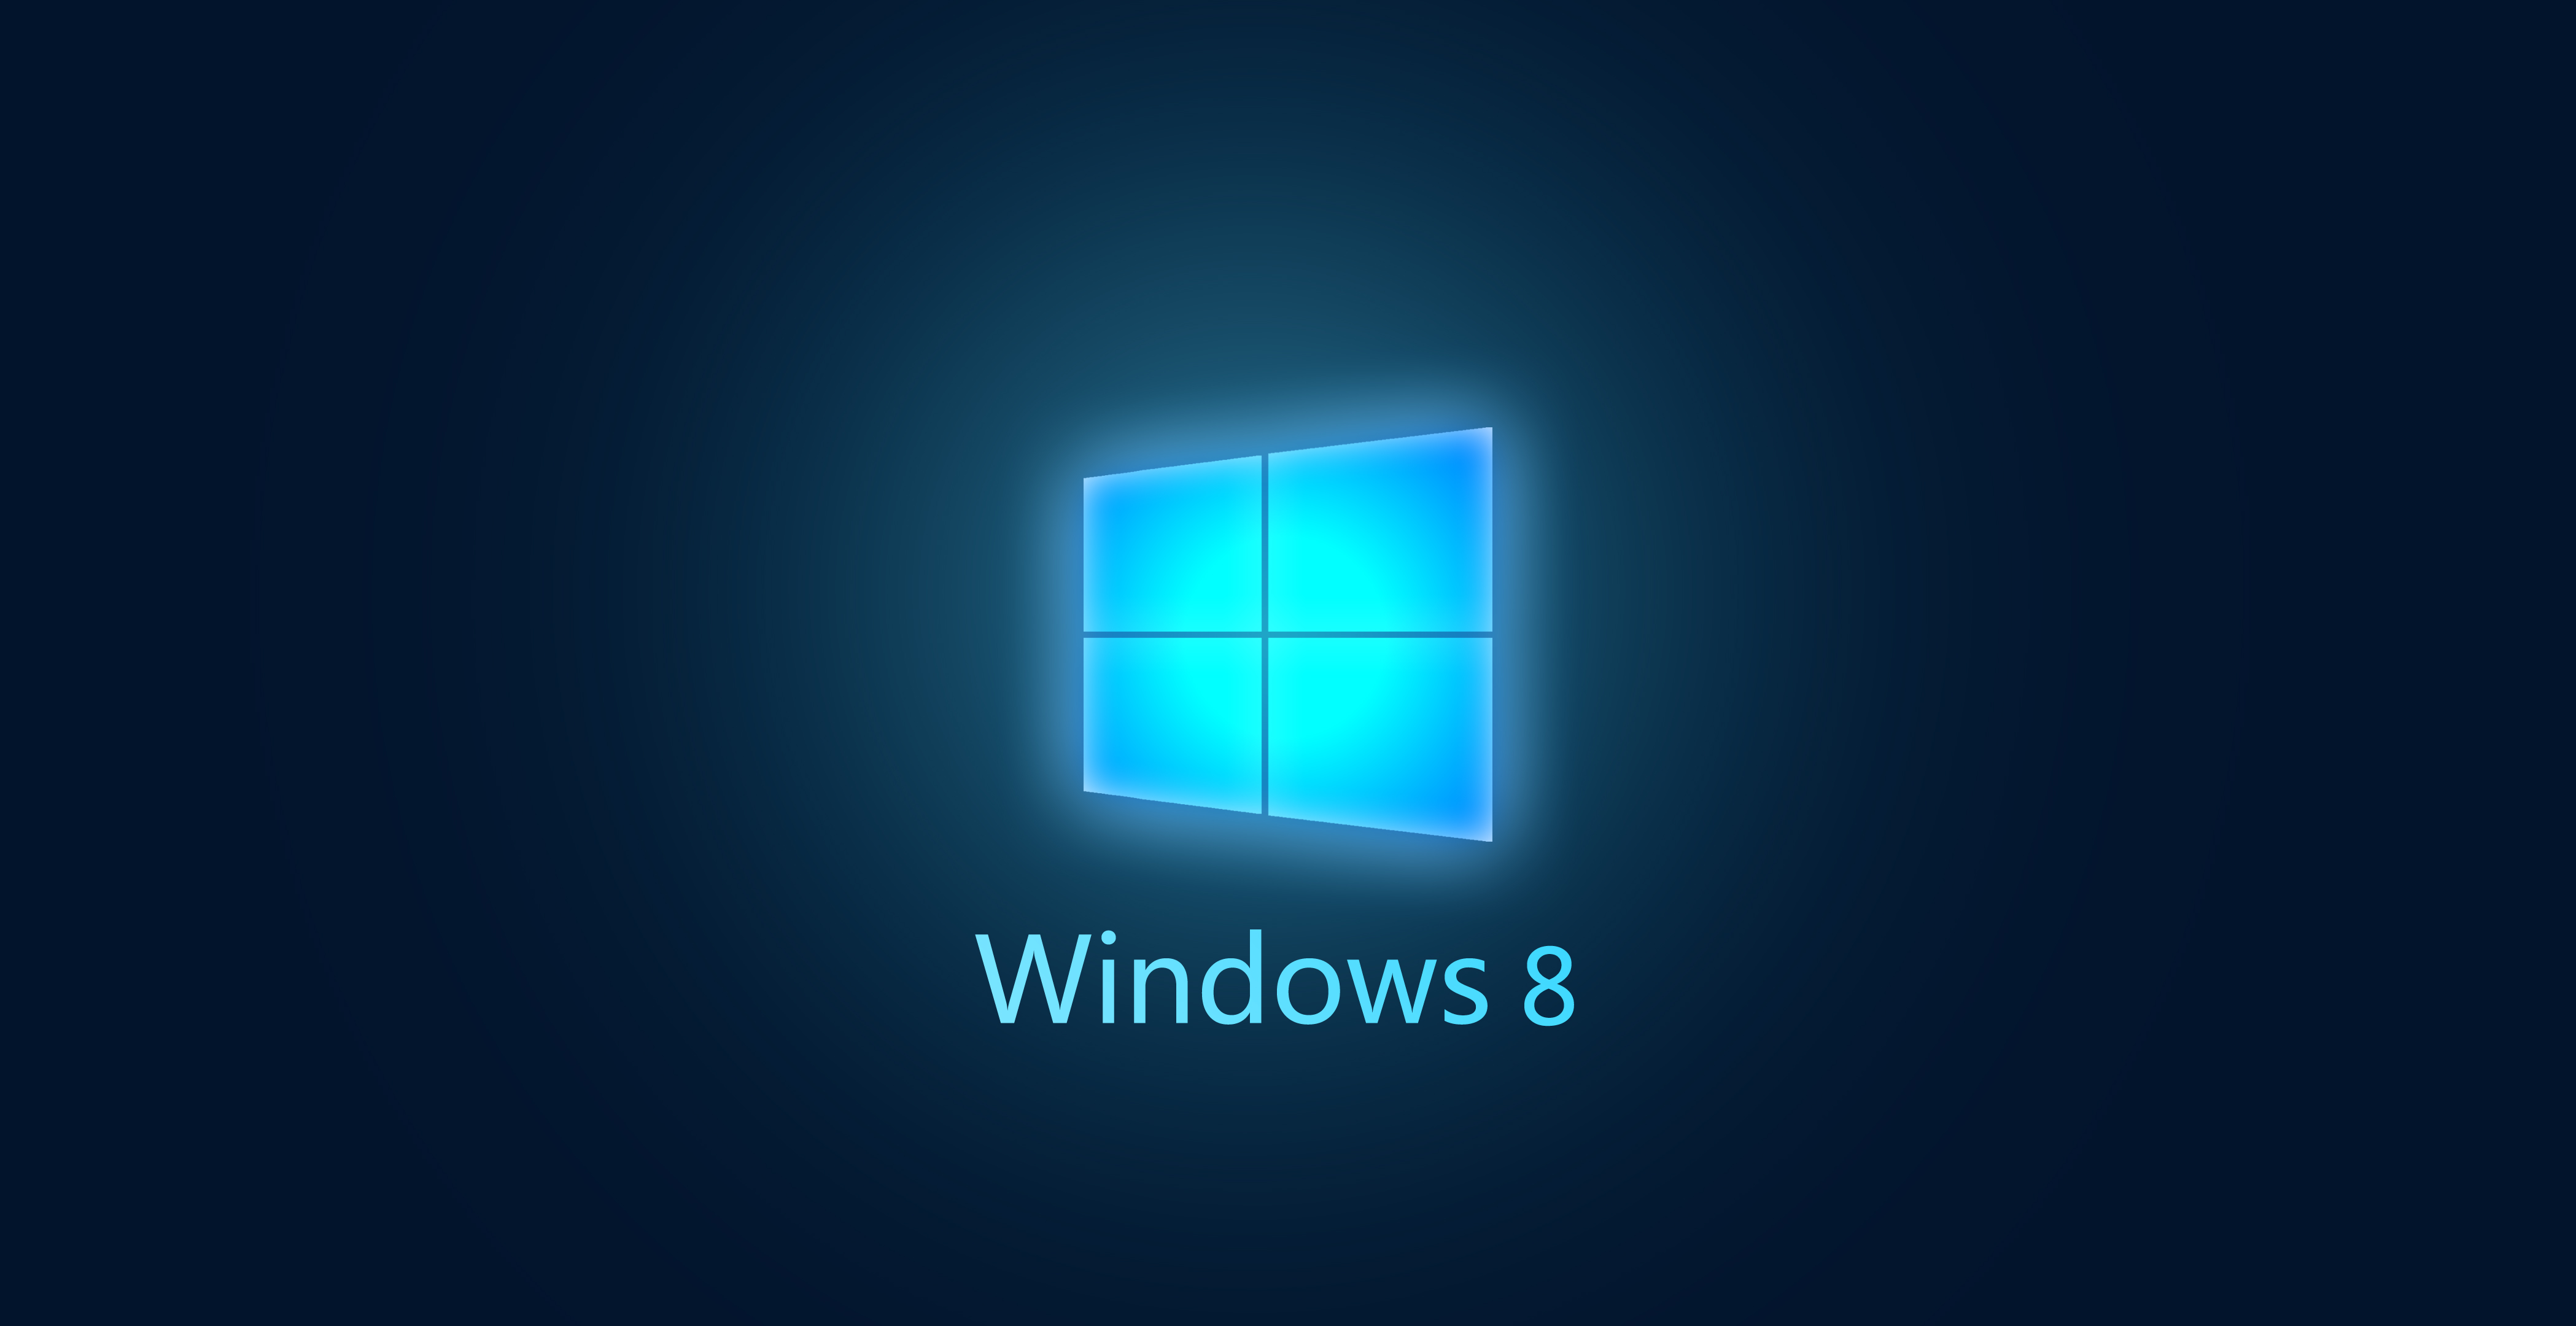 Windows Logo Microsoft Operating System Technology Brand Logo 4196x2160